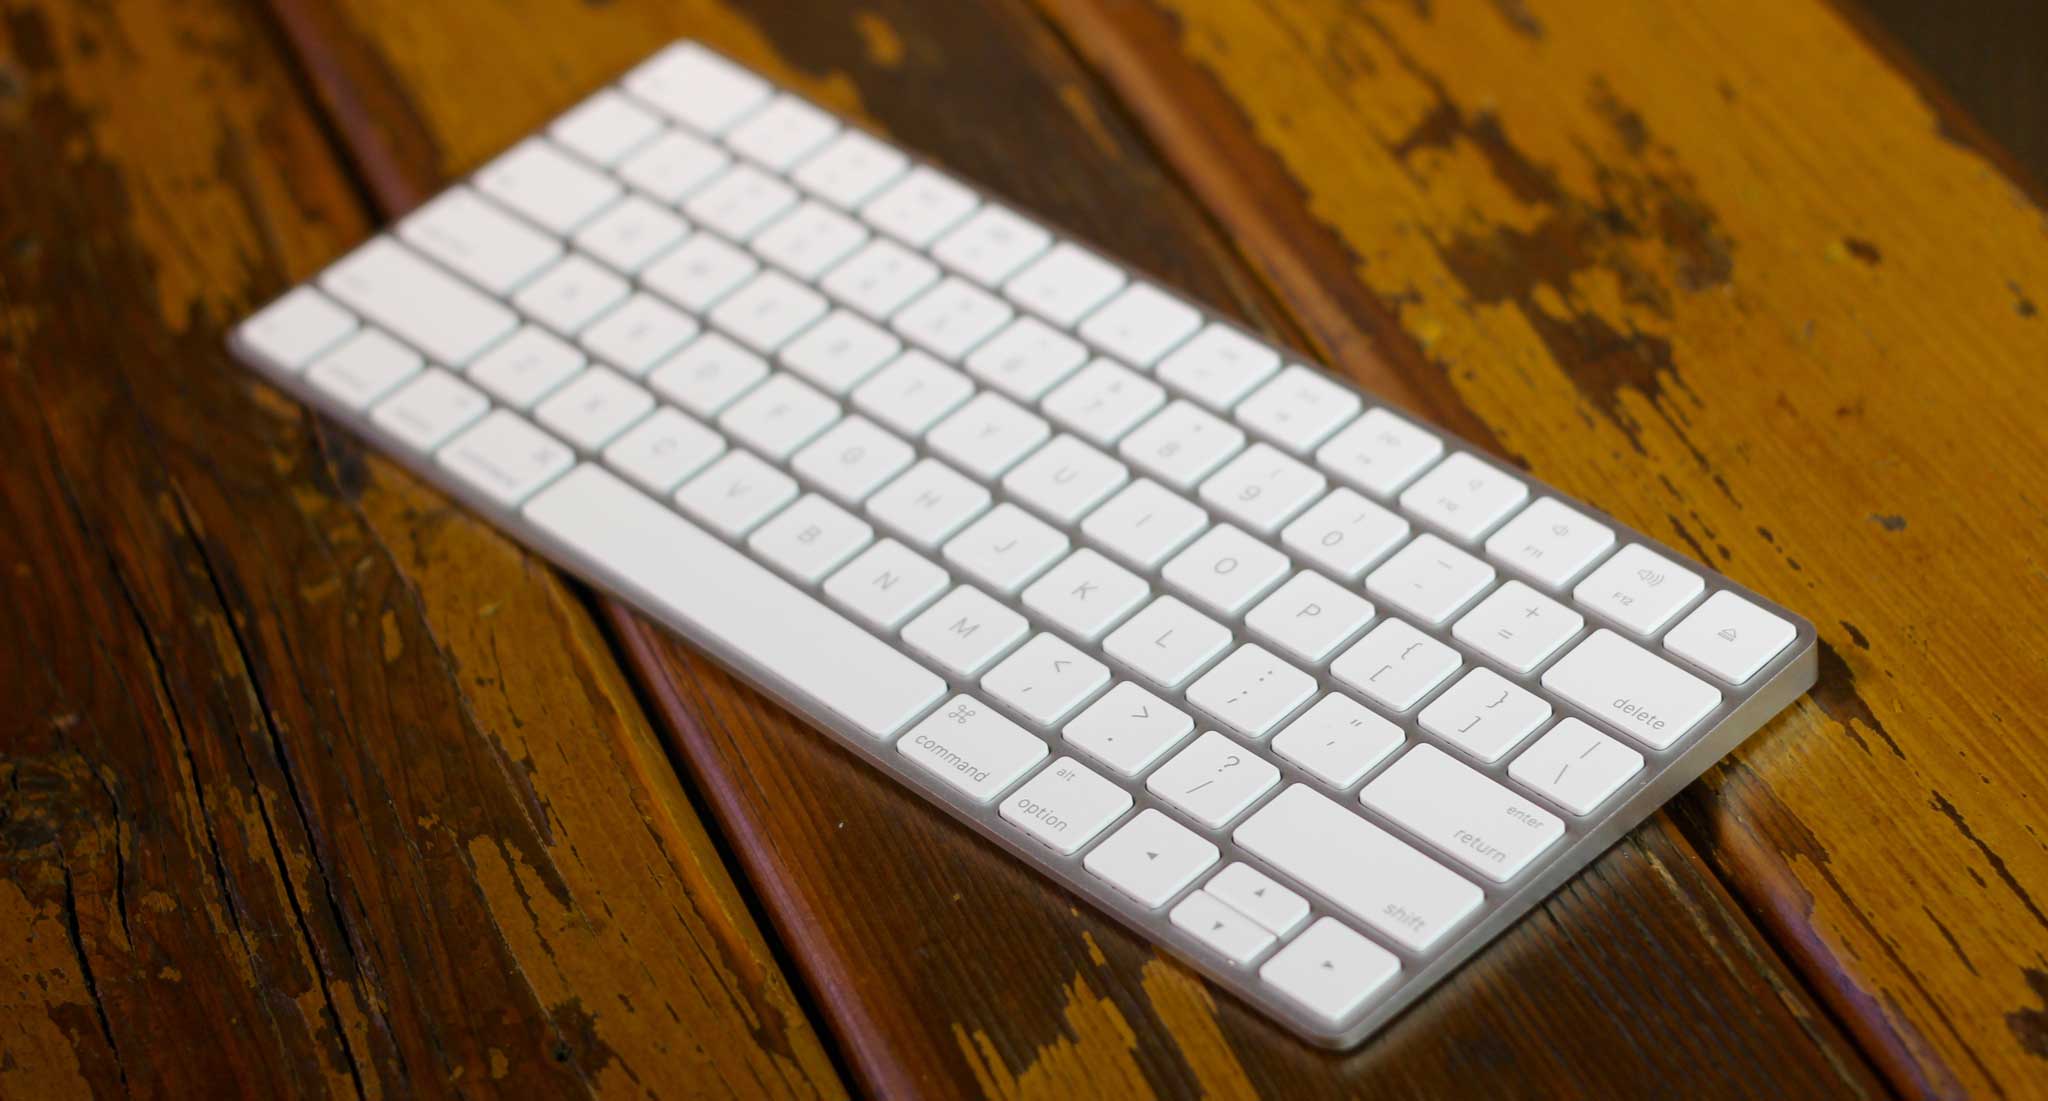 pair apple magic keyboard with windows 10